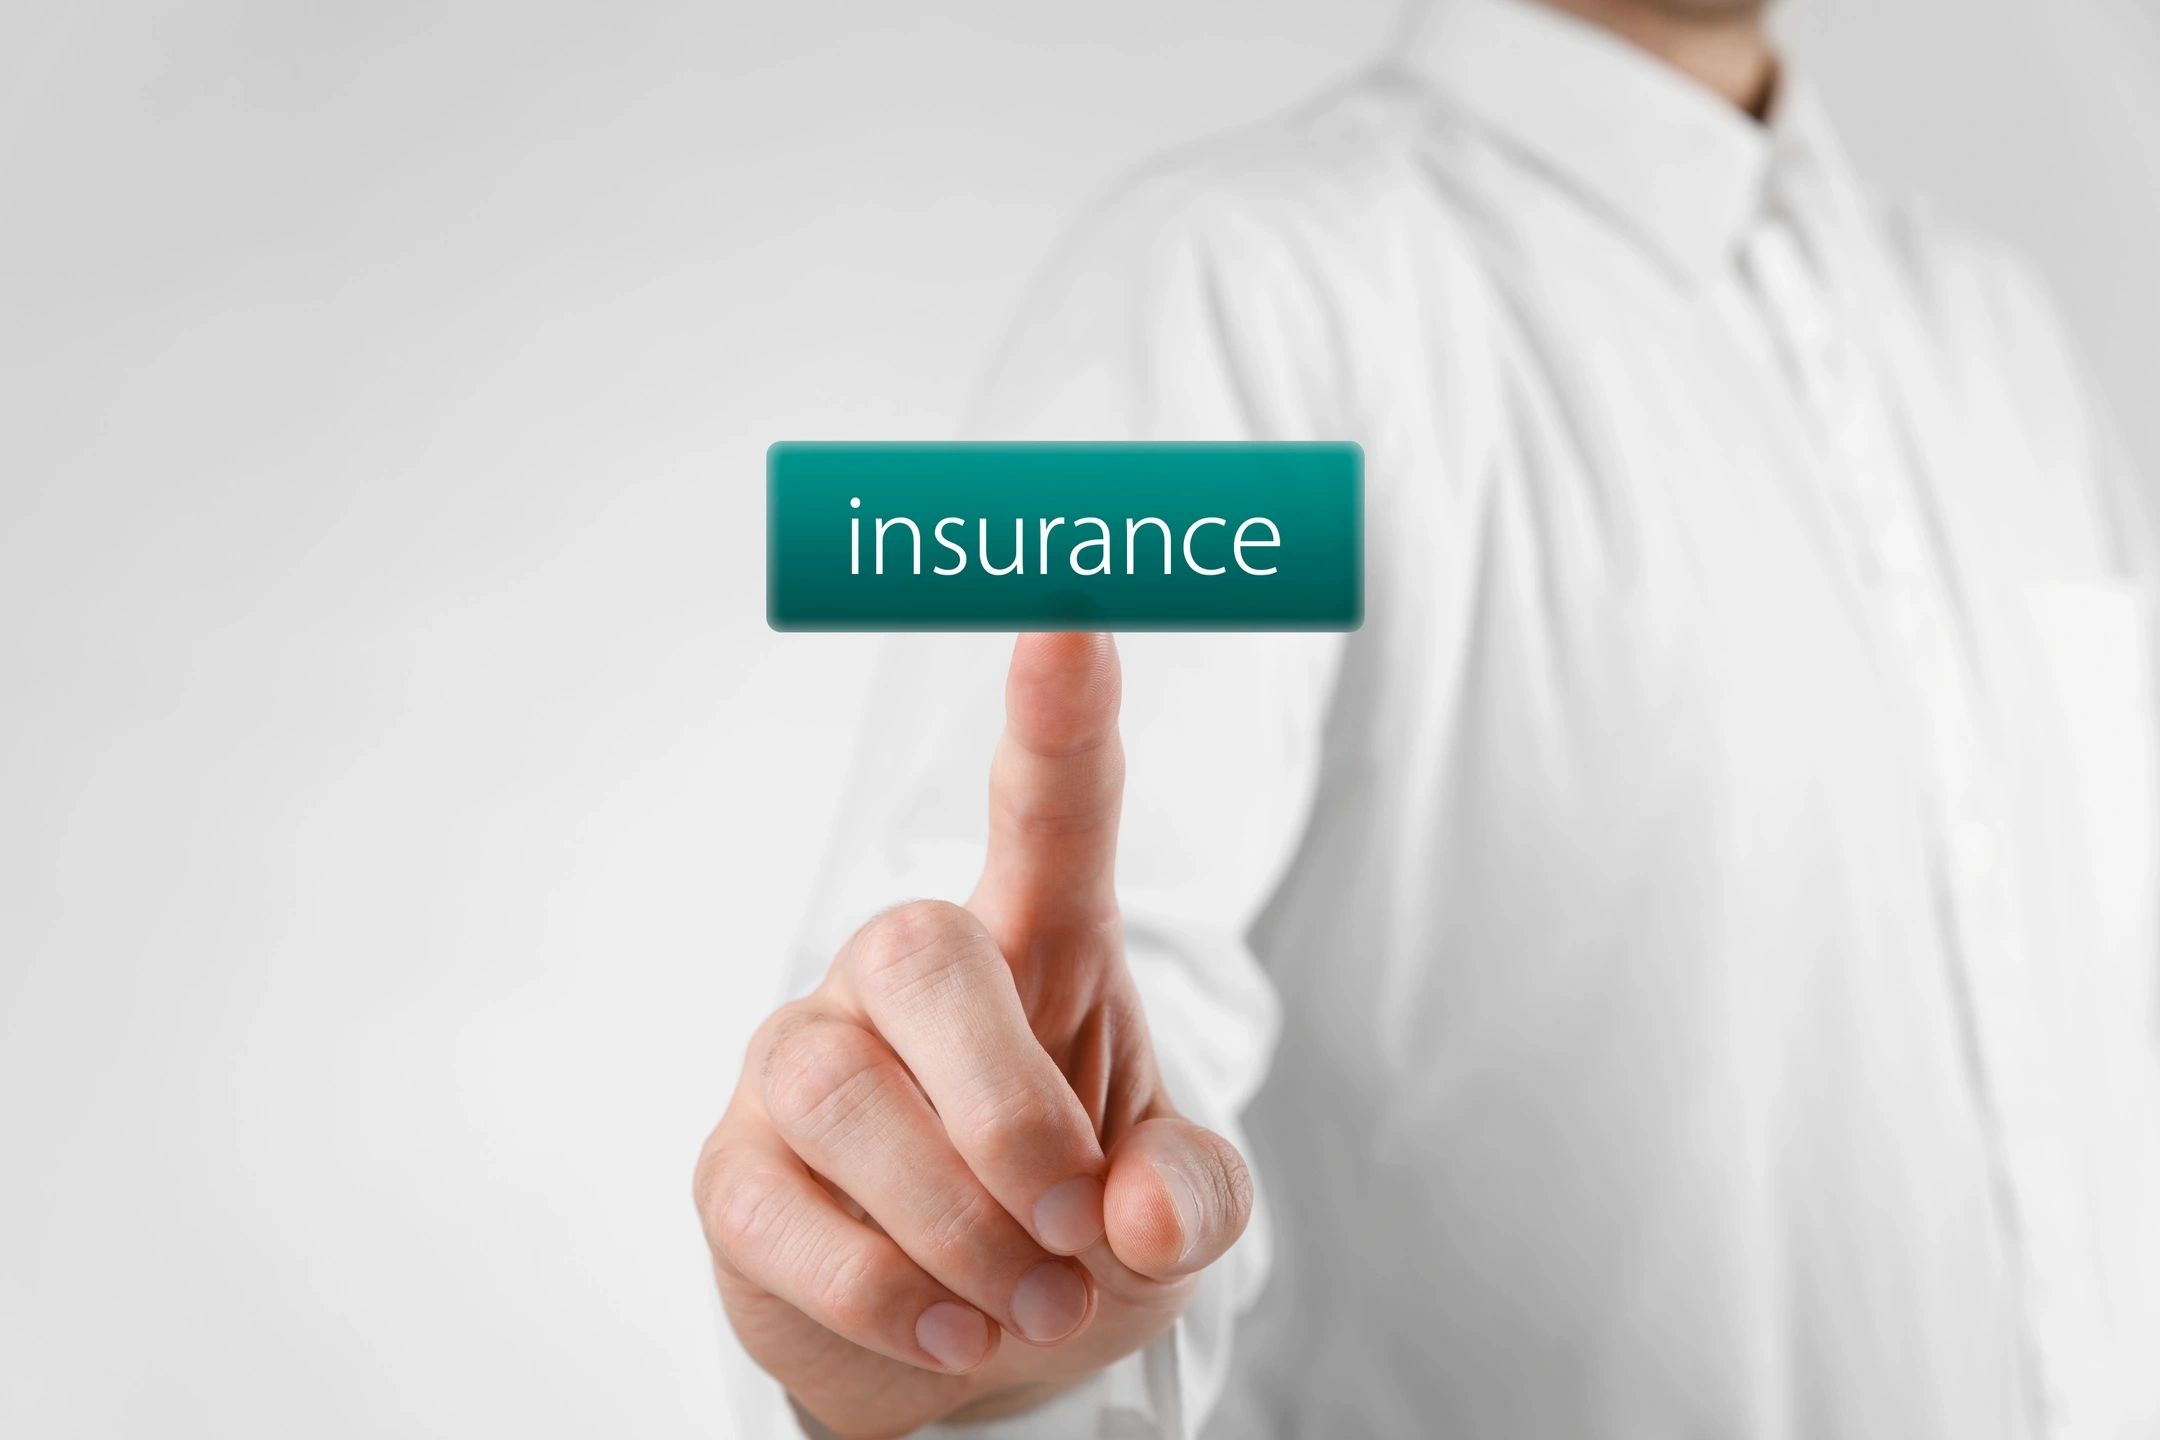 Insurance importance